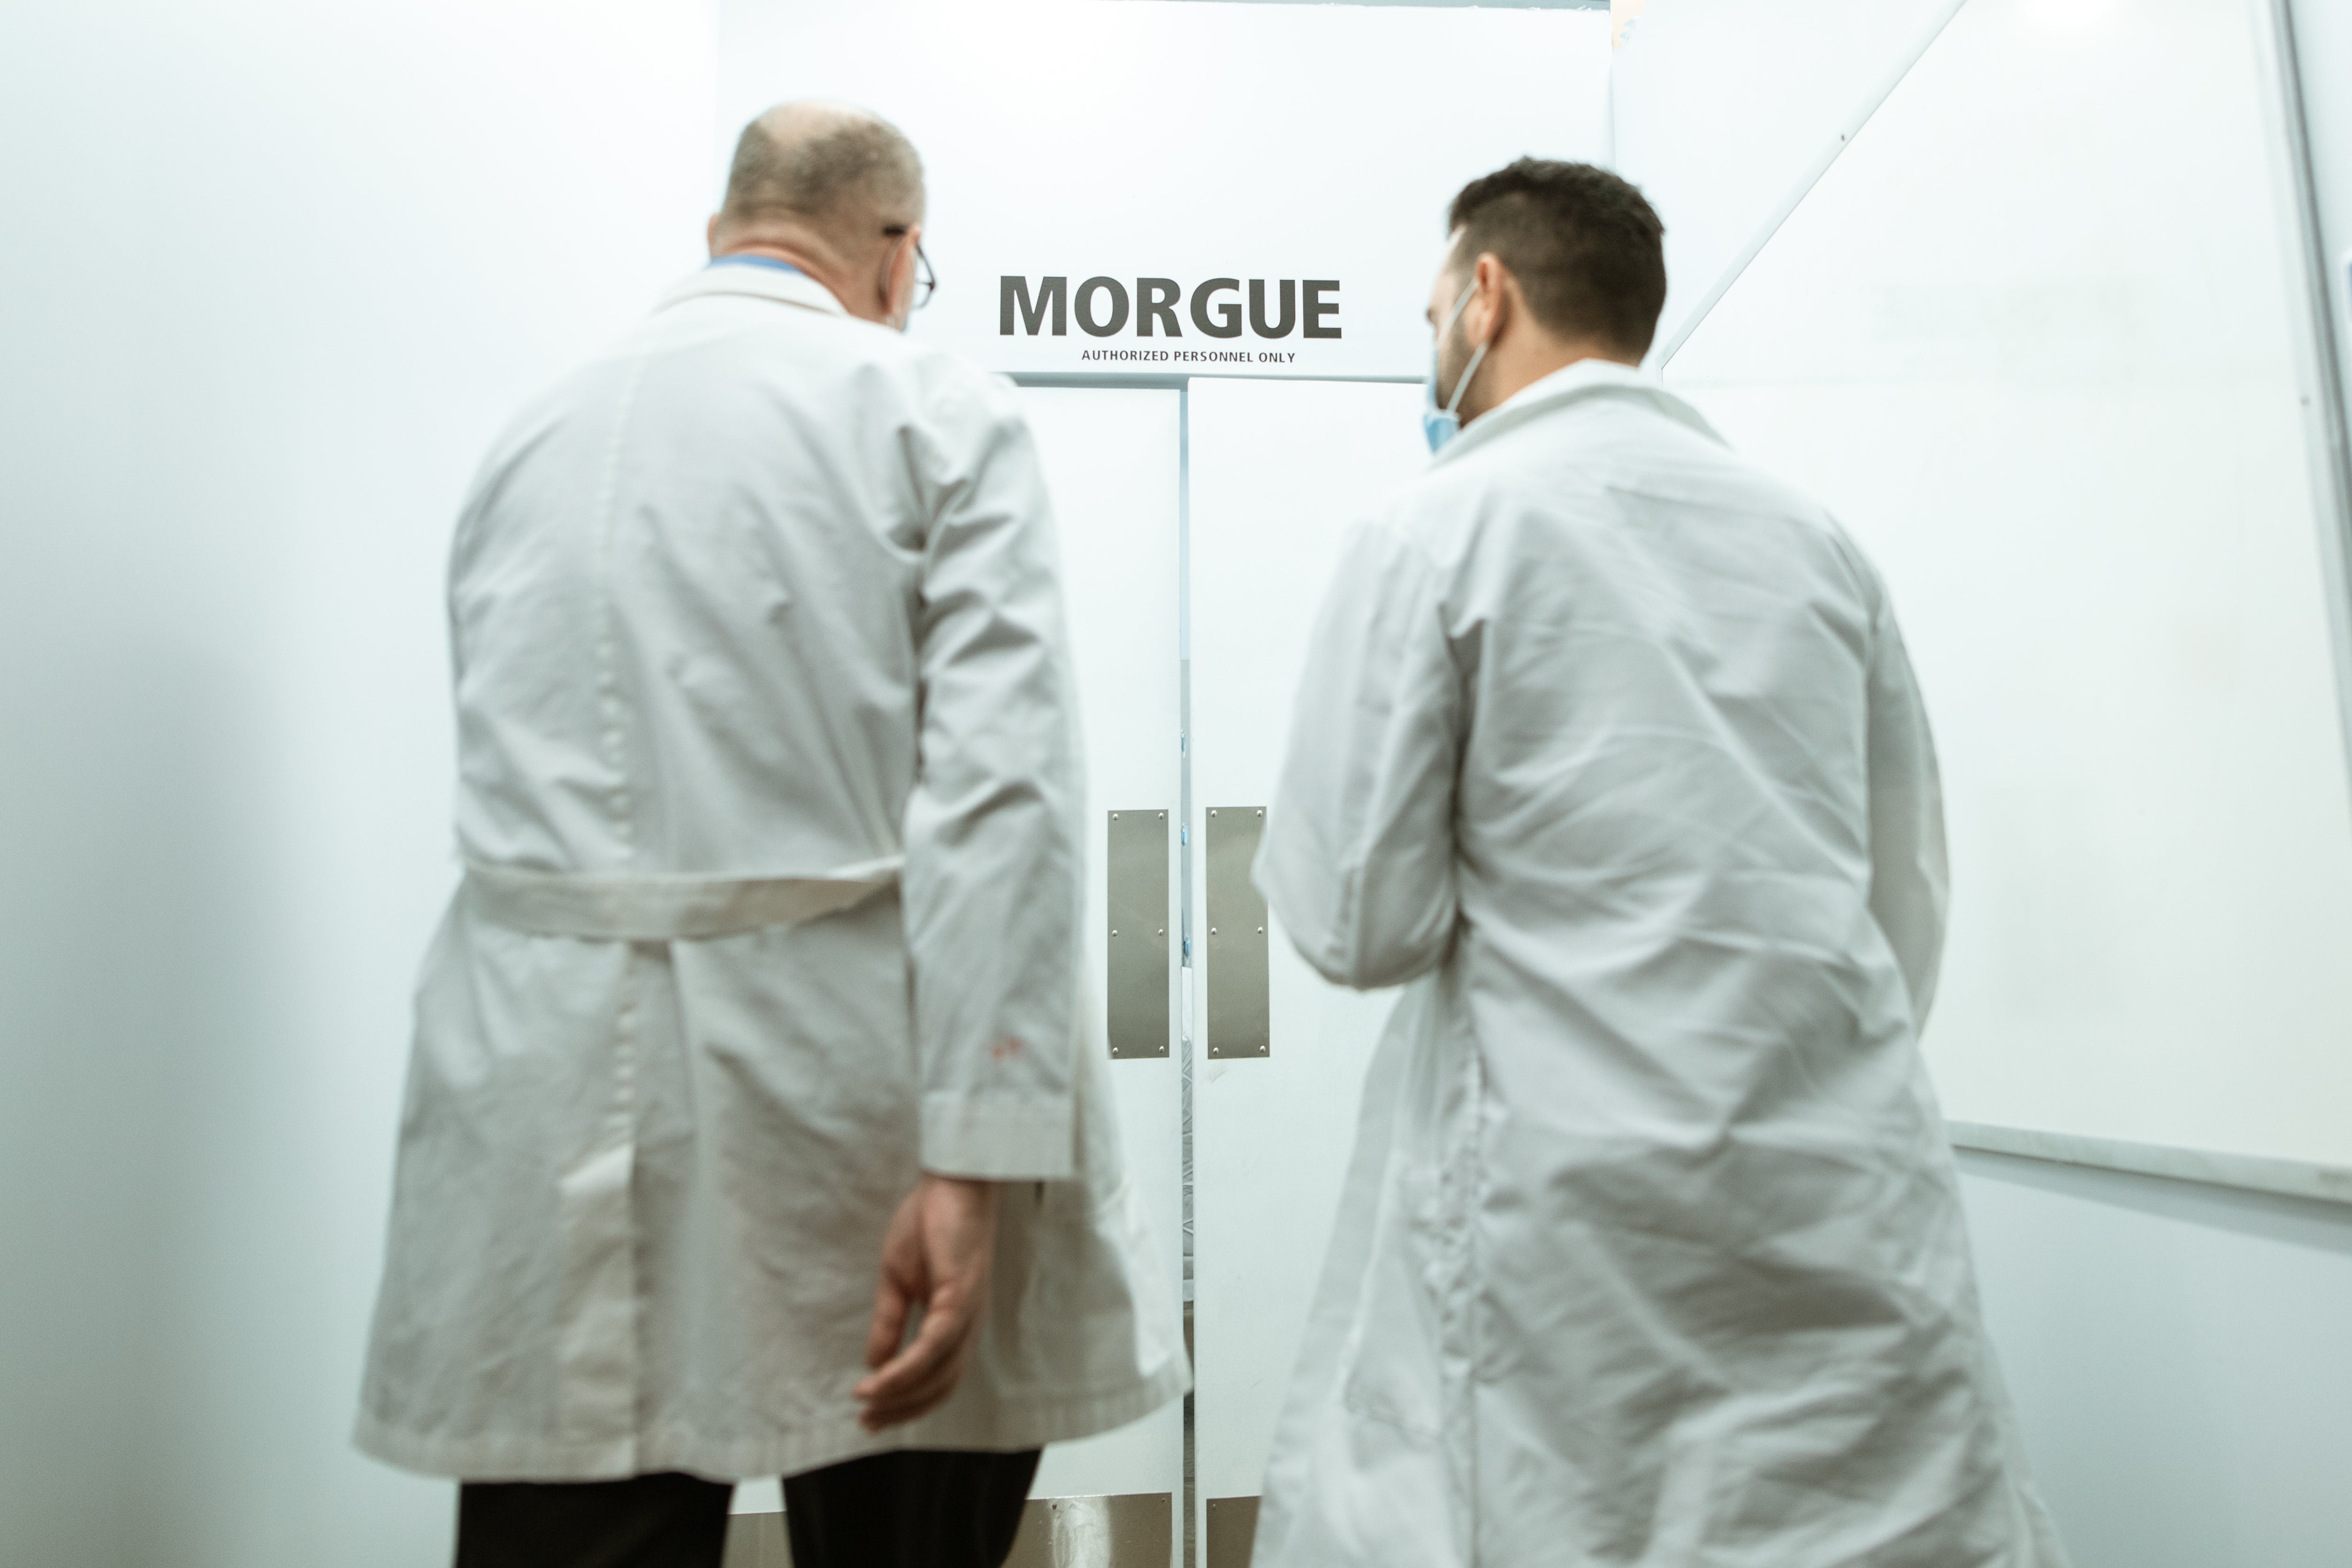 People entering a morgue. | Source: Pexels